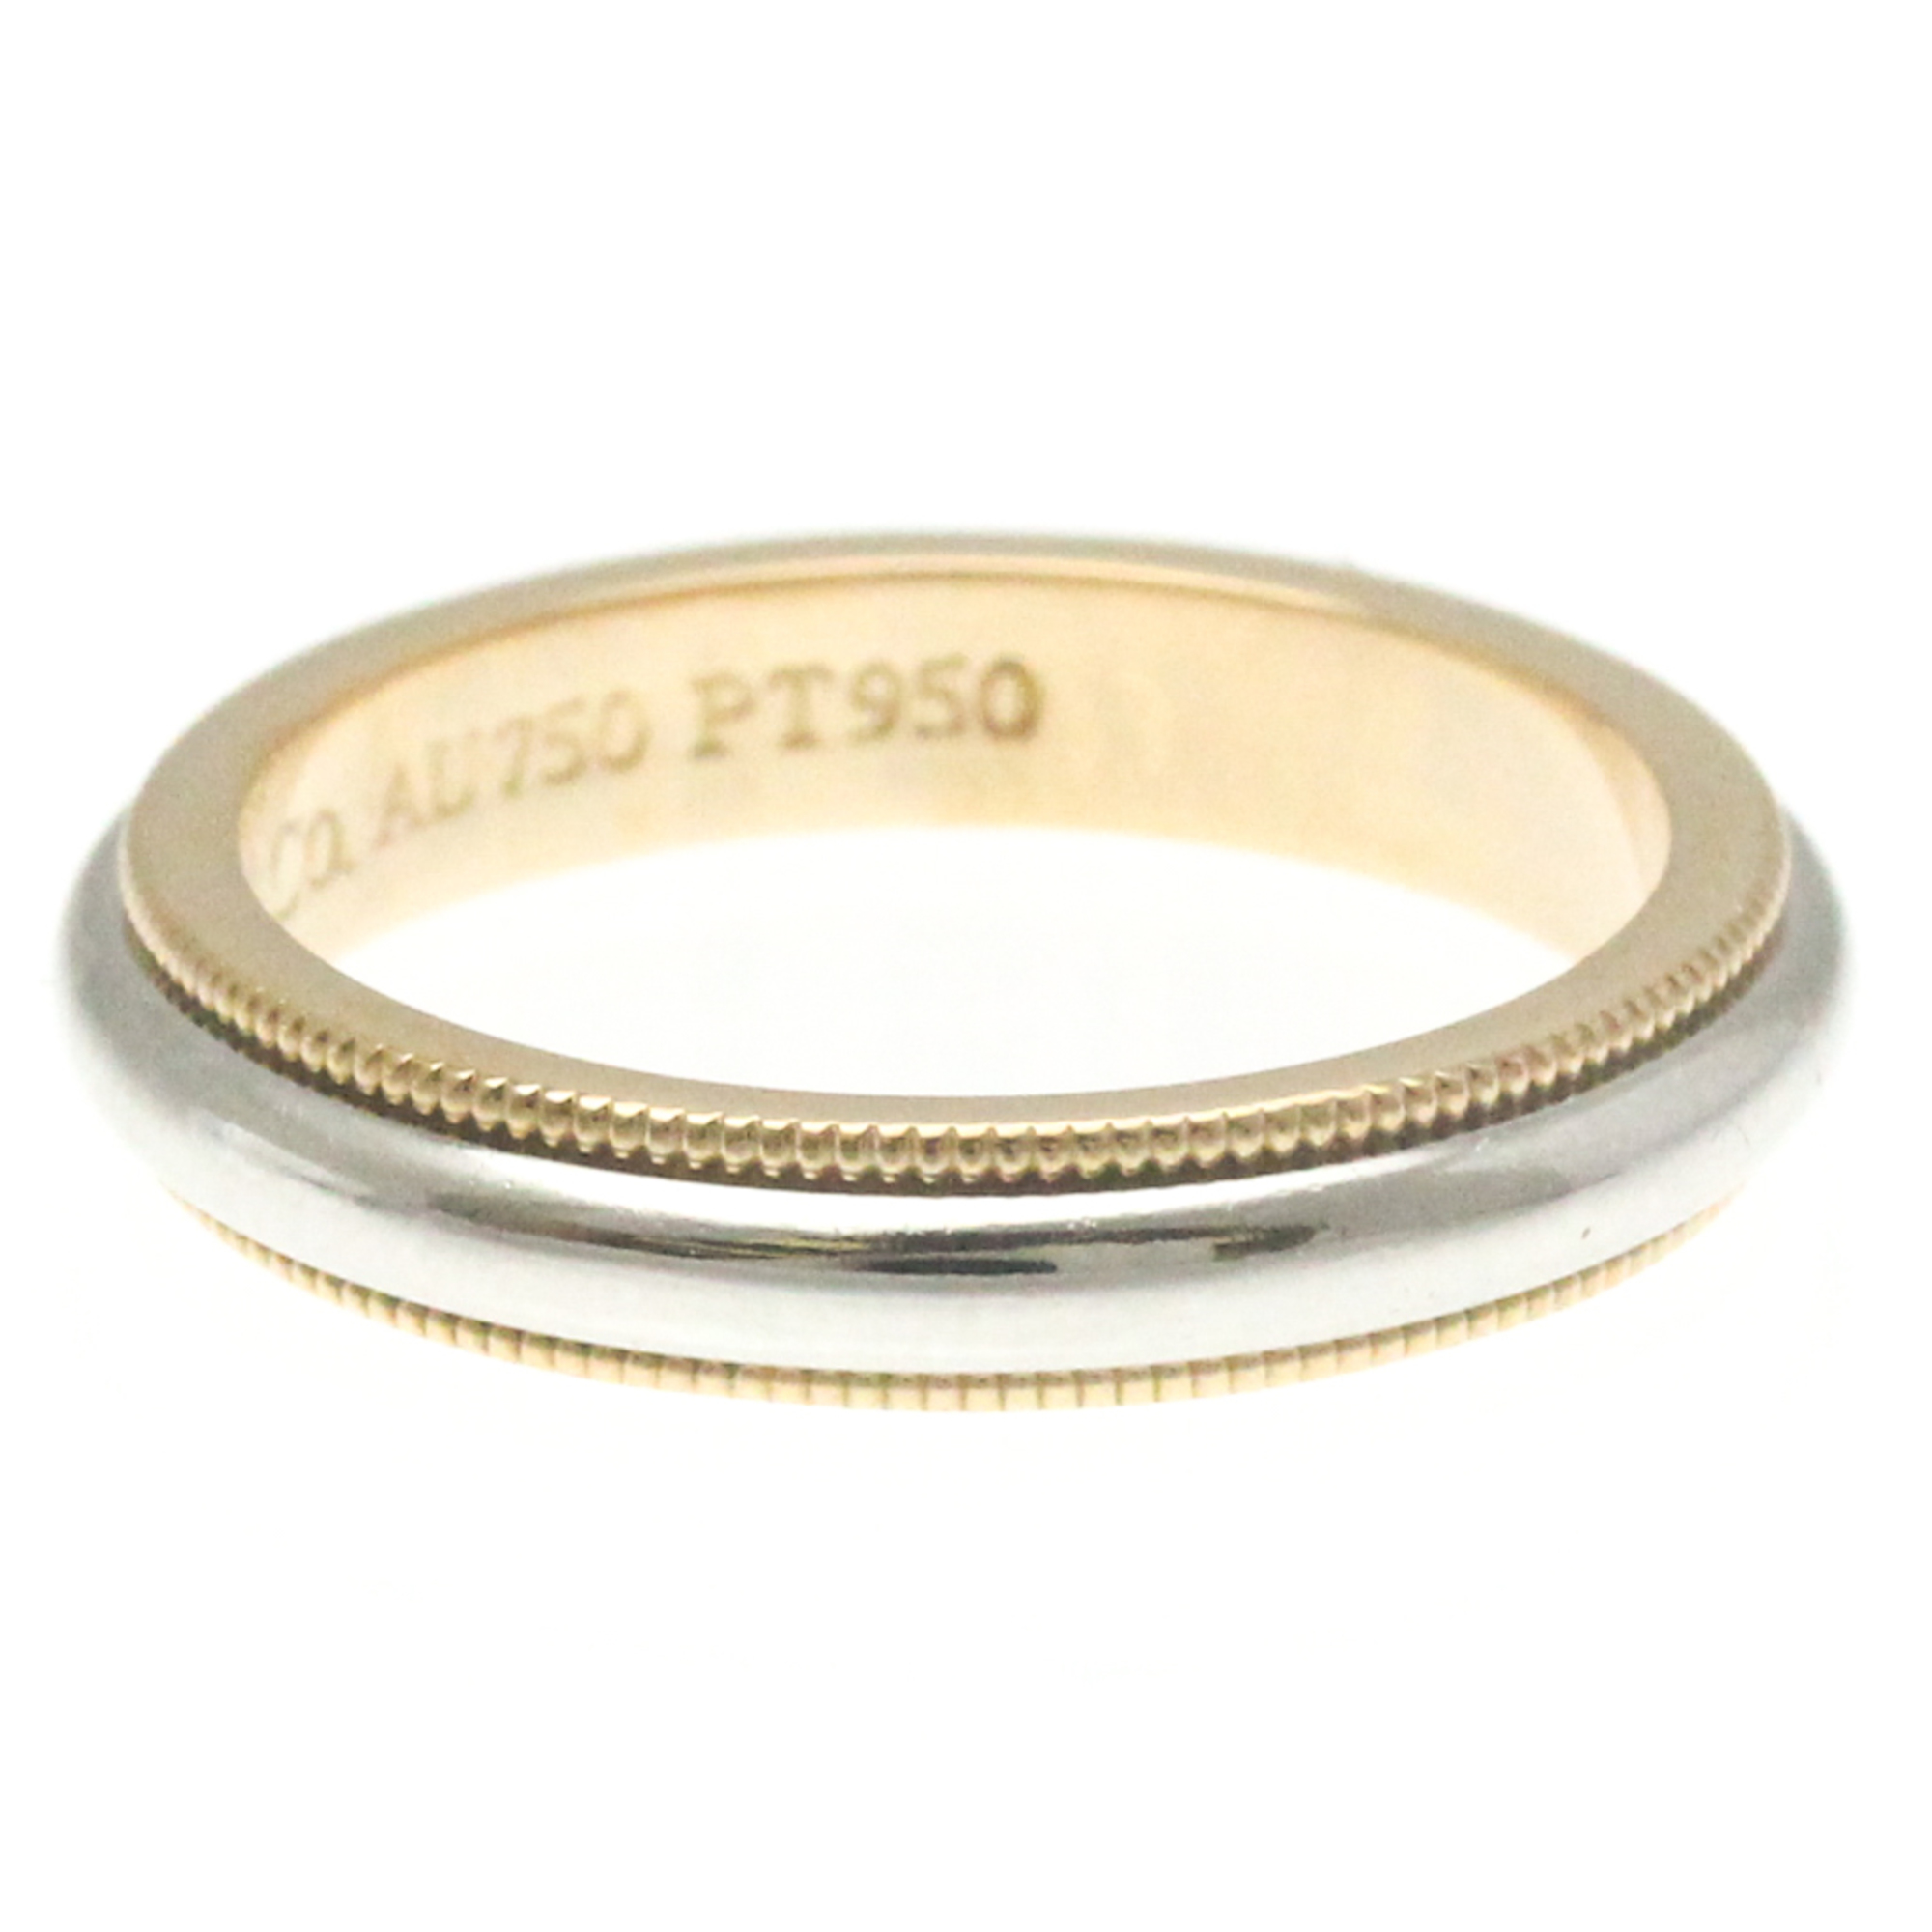 Tiffany Classic Milgrain Ring Pink Gold (18K),Platinum Fashion No Stone Band Ring Gold,Silver